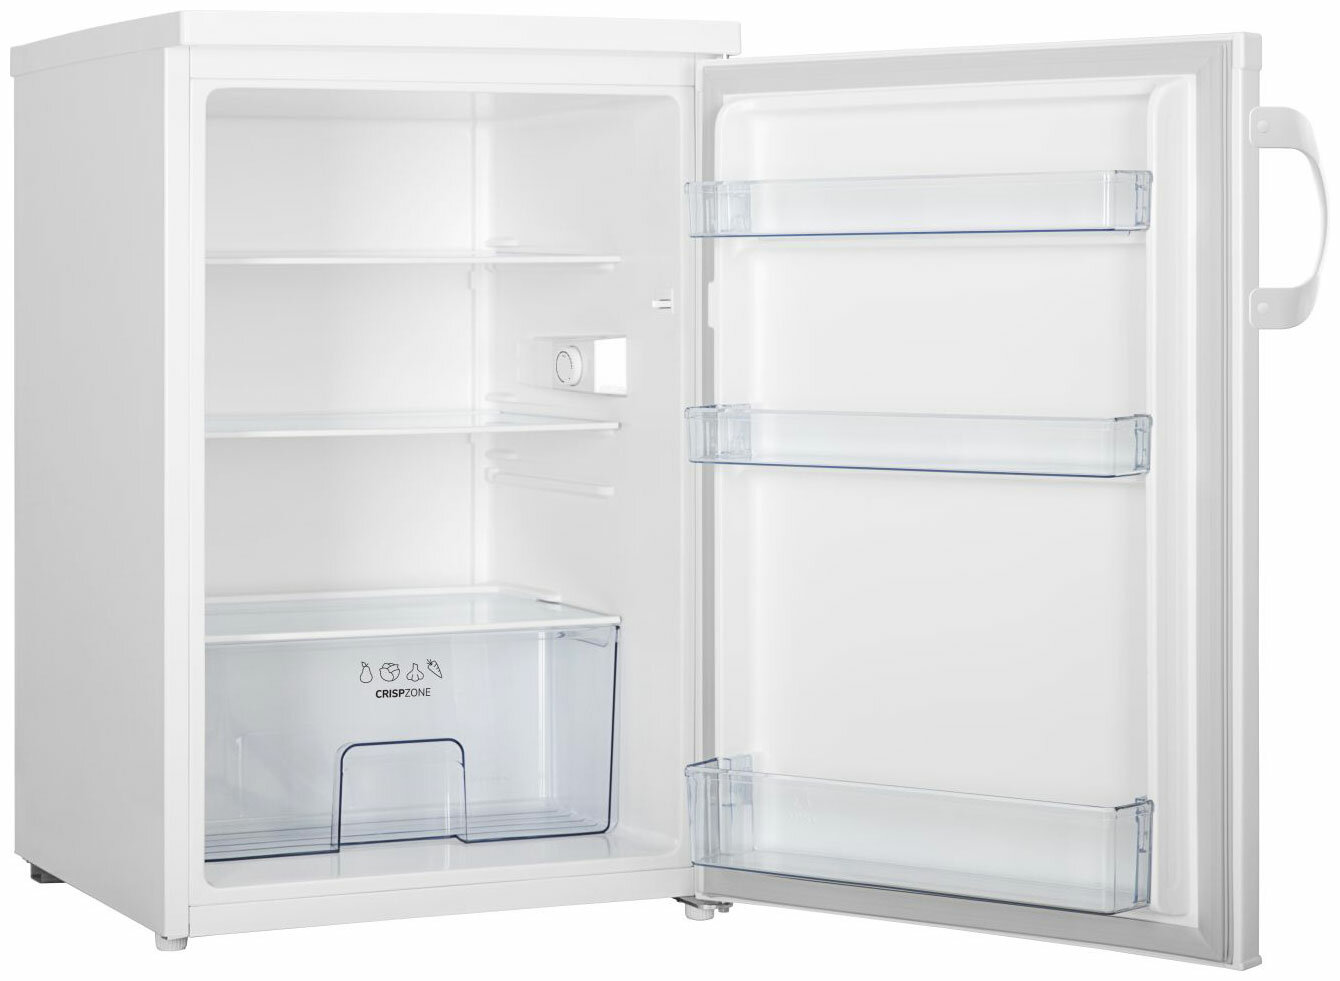 Однокамерный холодильник Gorenje R 491 PW